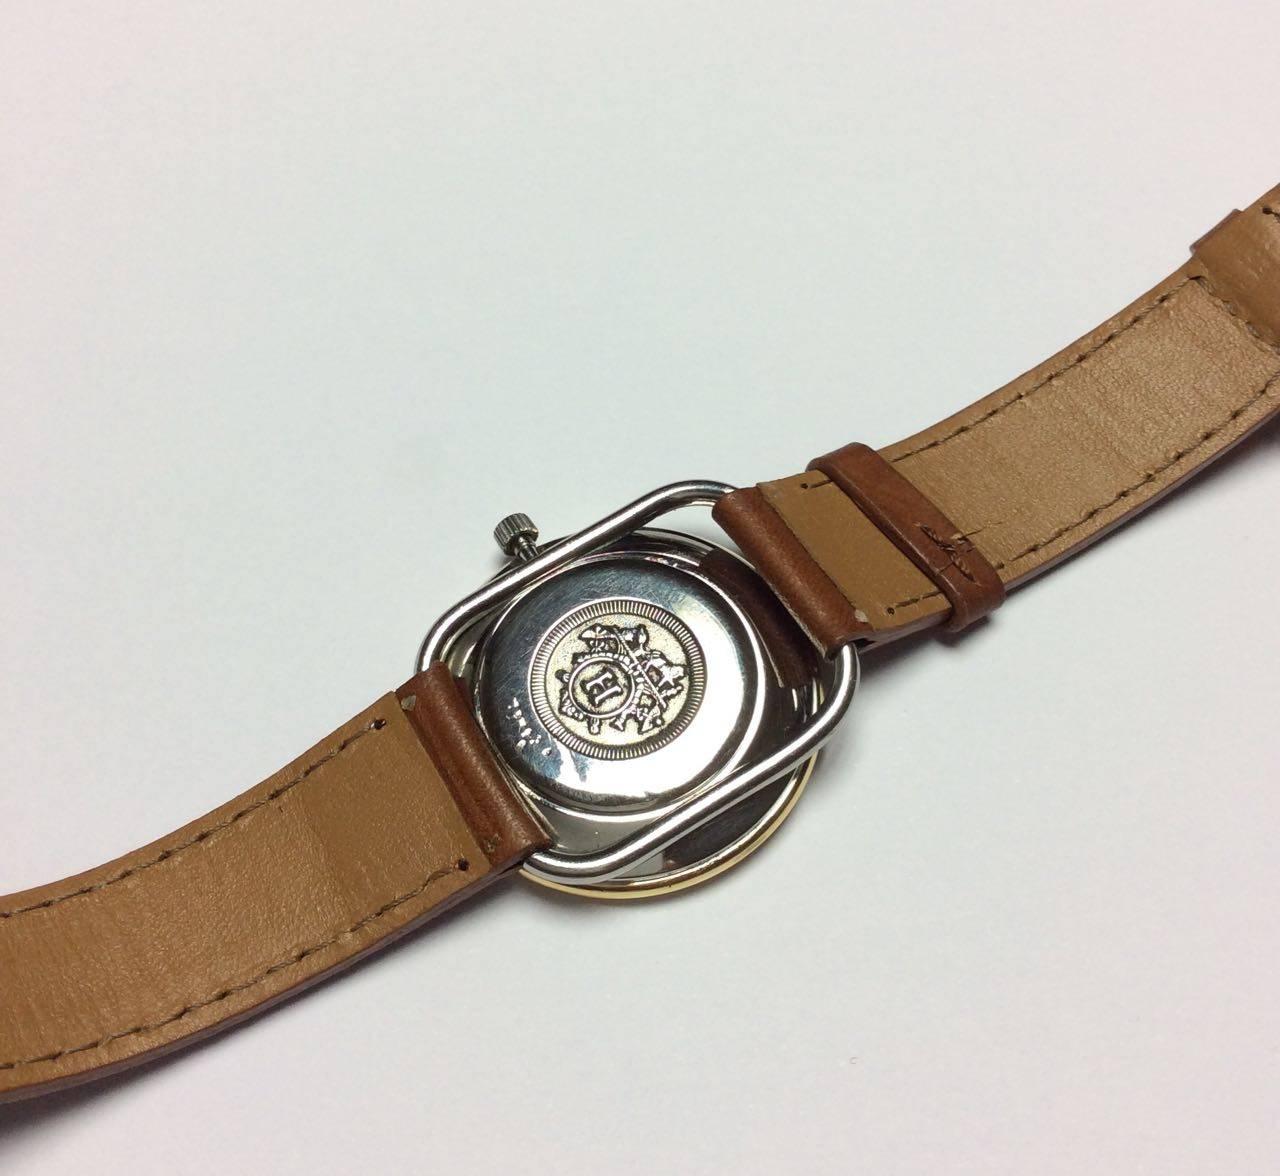 Hermes Arceau steel, gold plate watch, 32 mm diameter, white dial, quartz movement, leather strap.